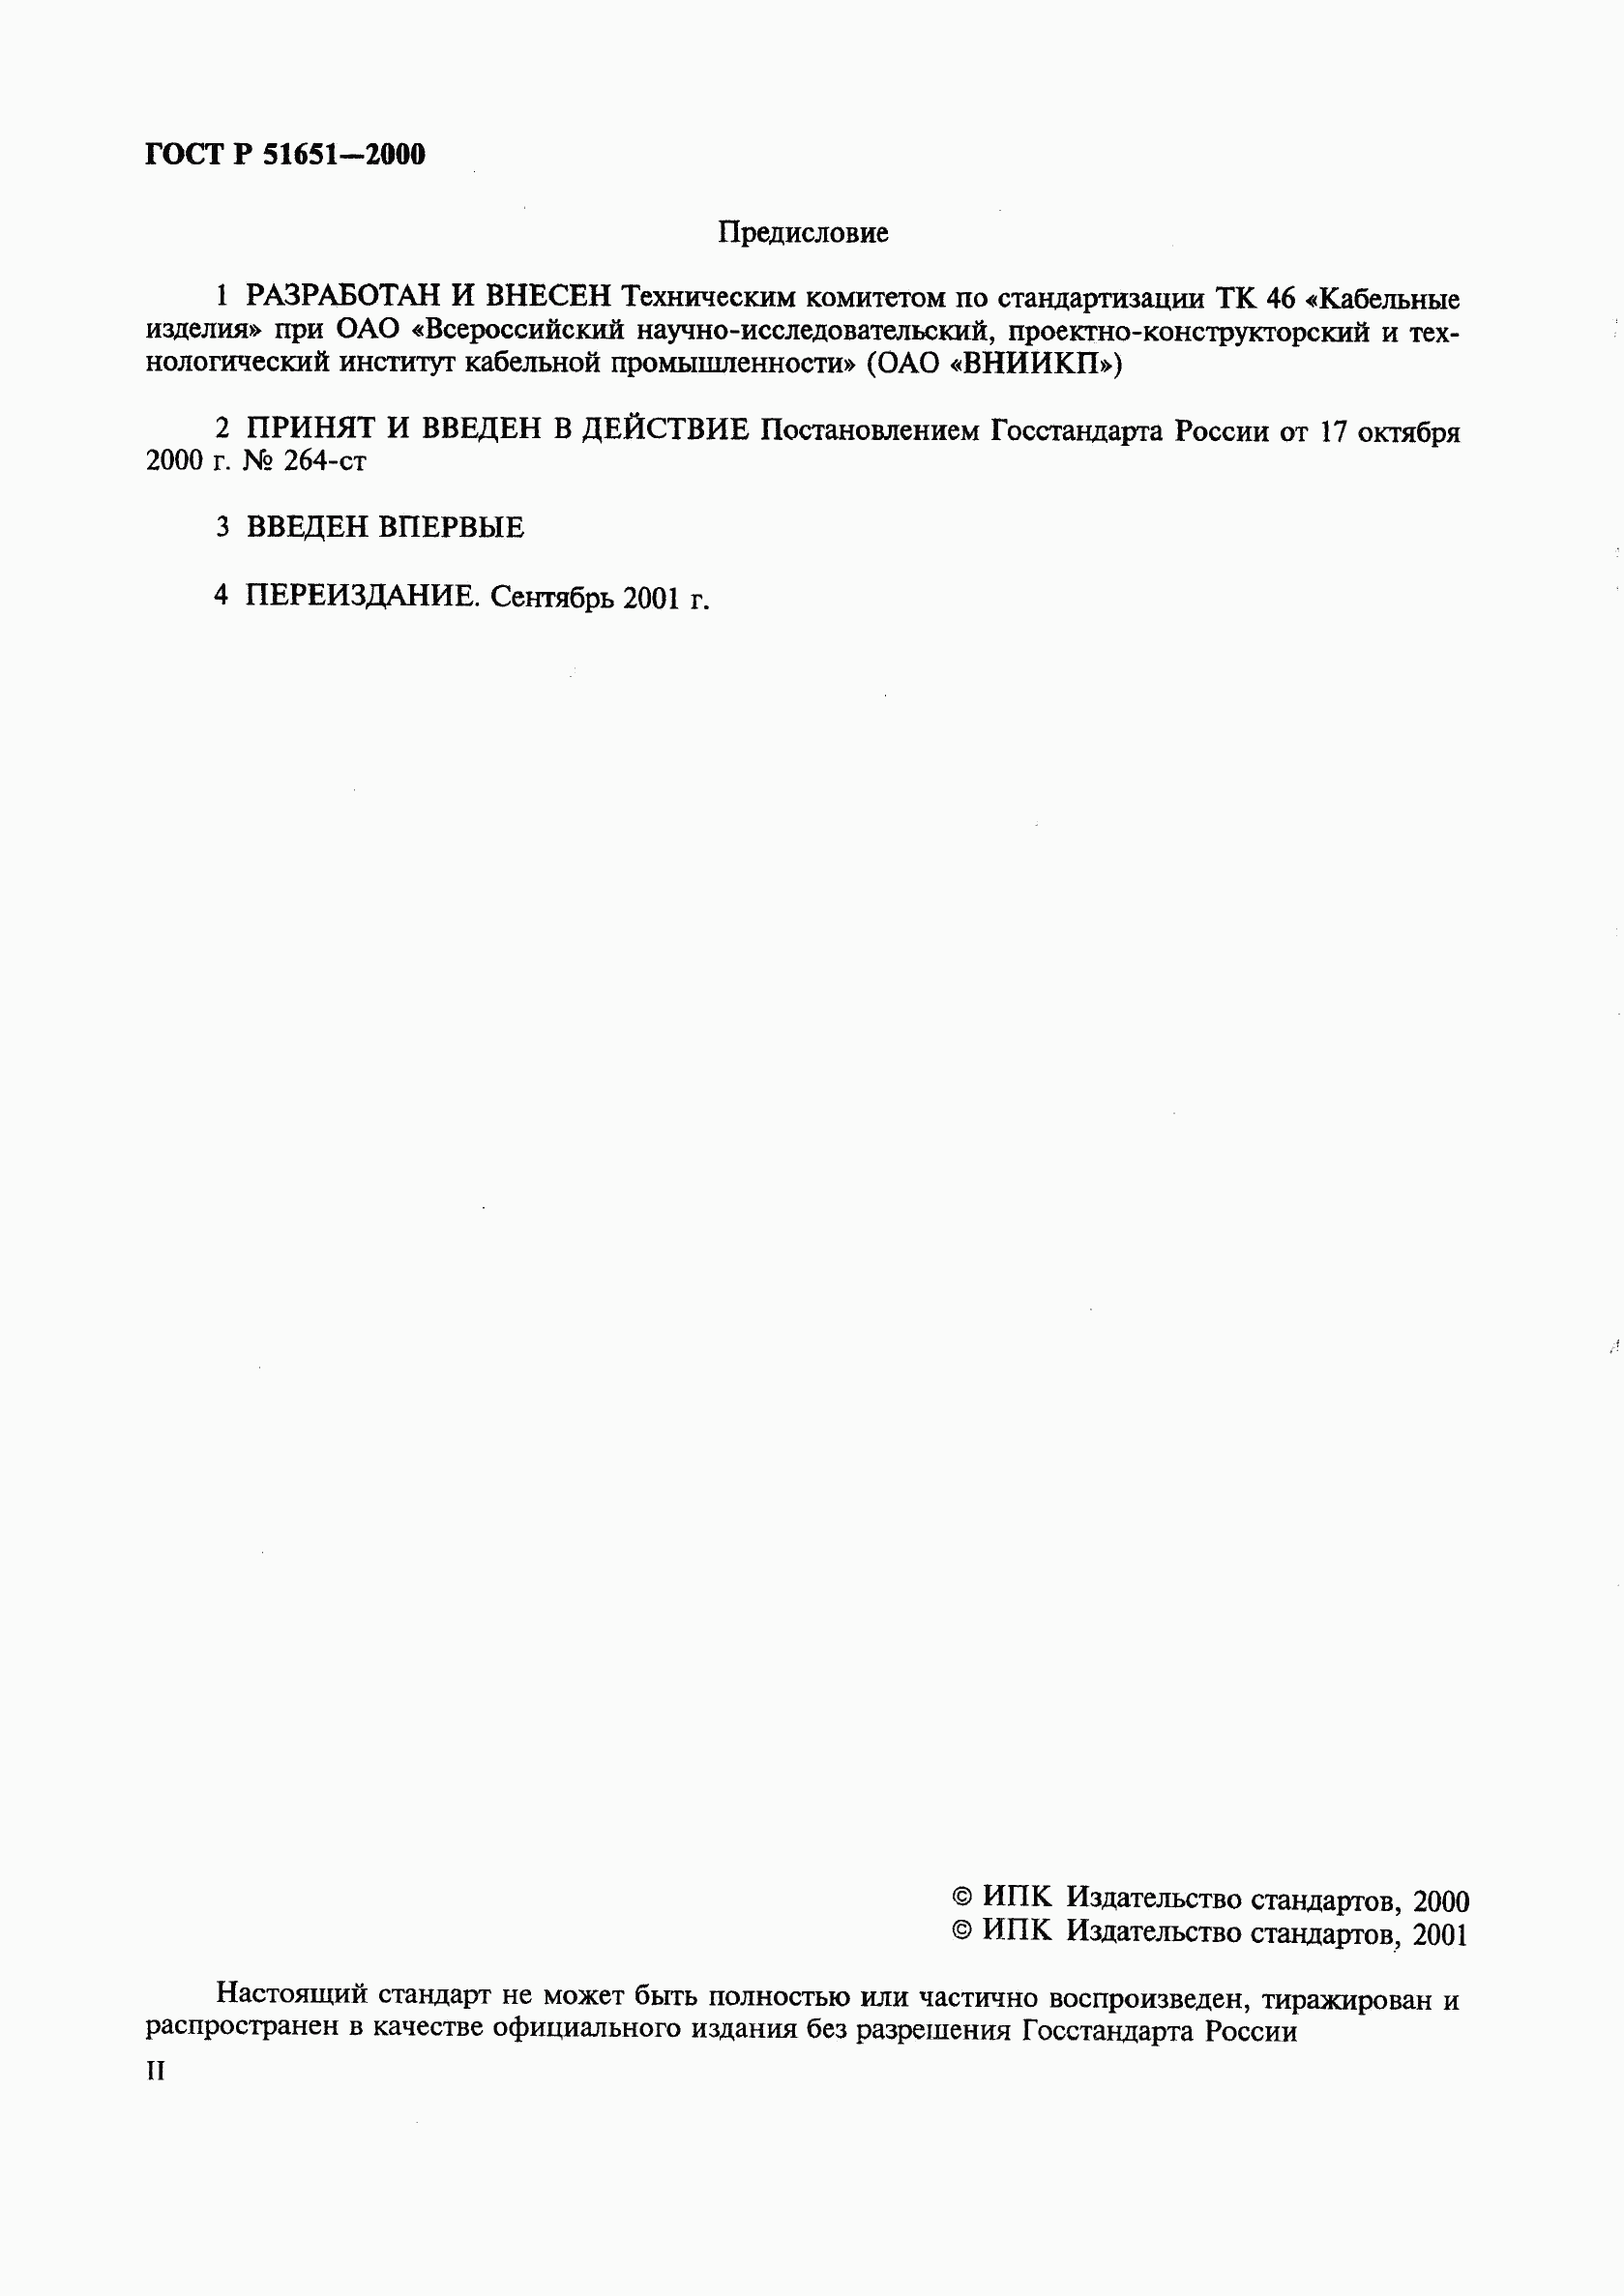 ГОСТ Р 51651-2000, страница 2